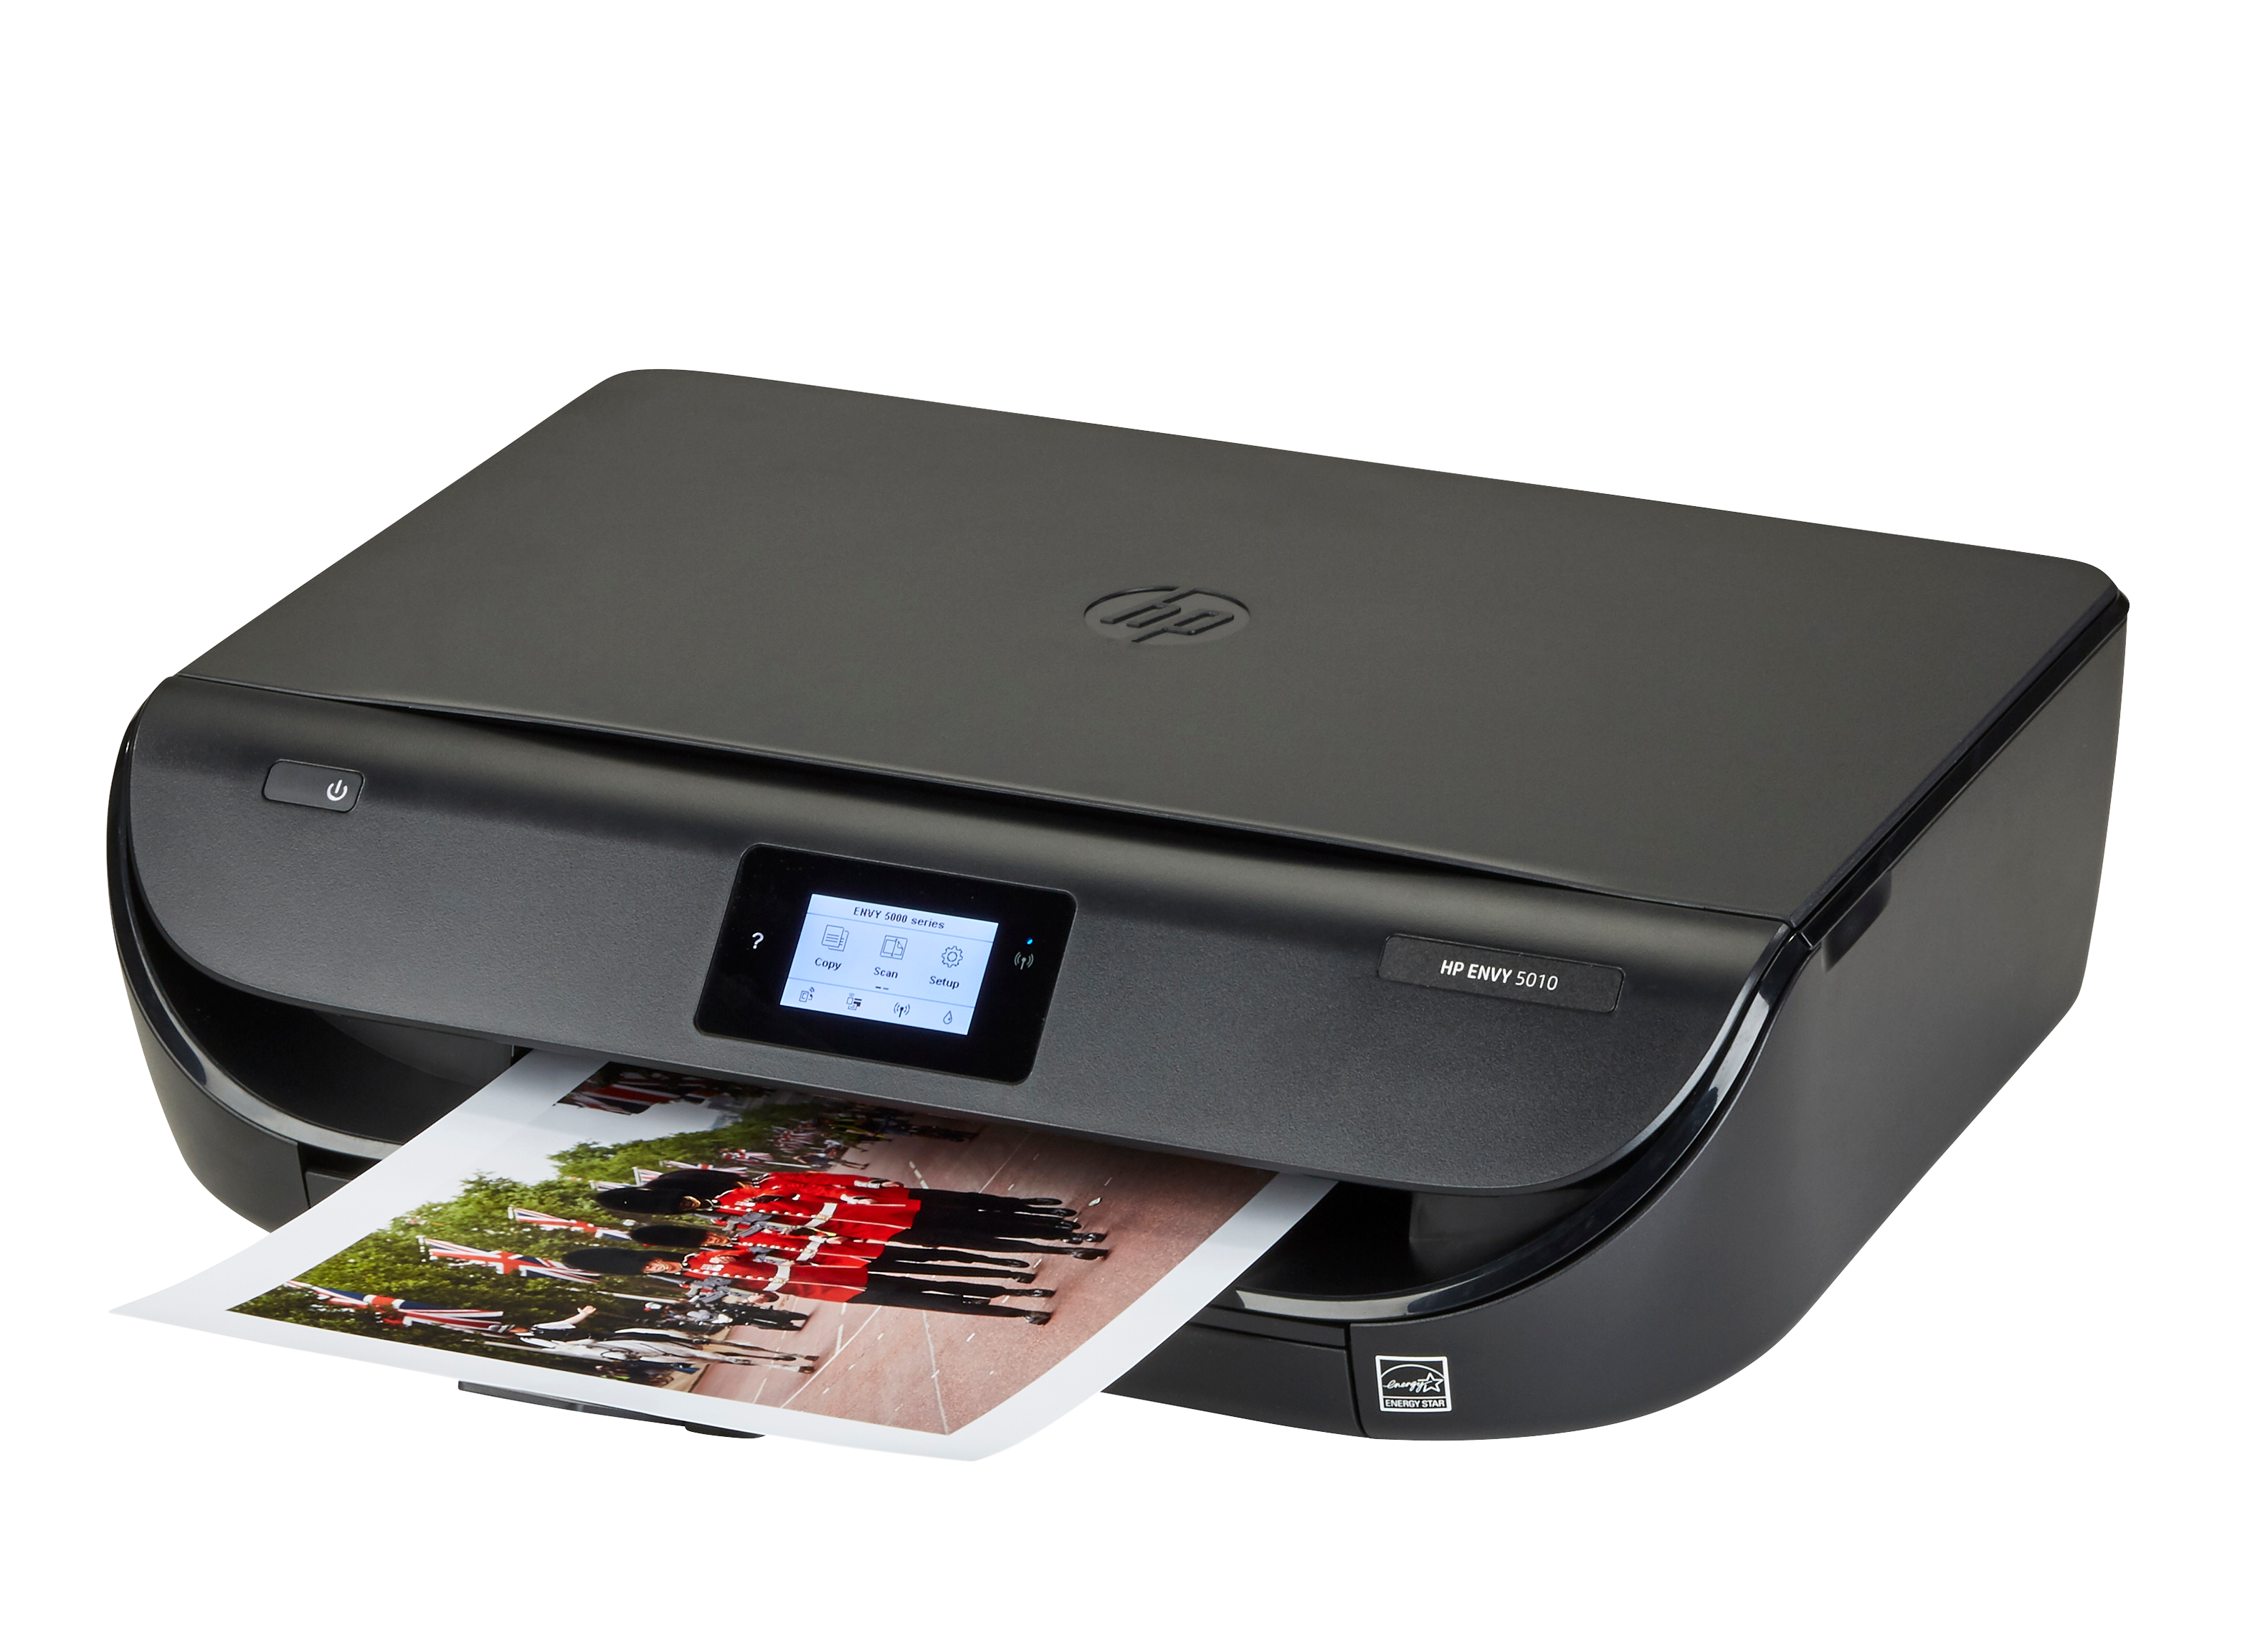 HP Envy 5010 Printer - Reports